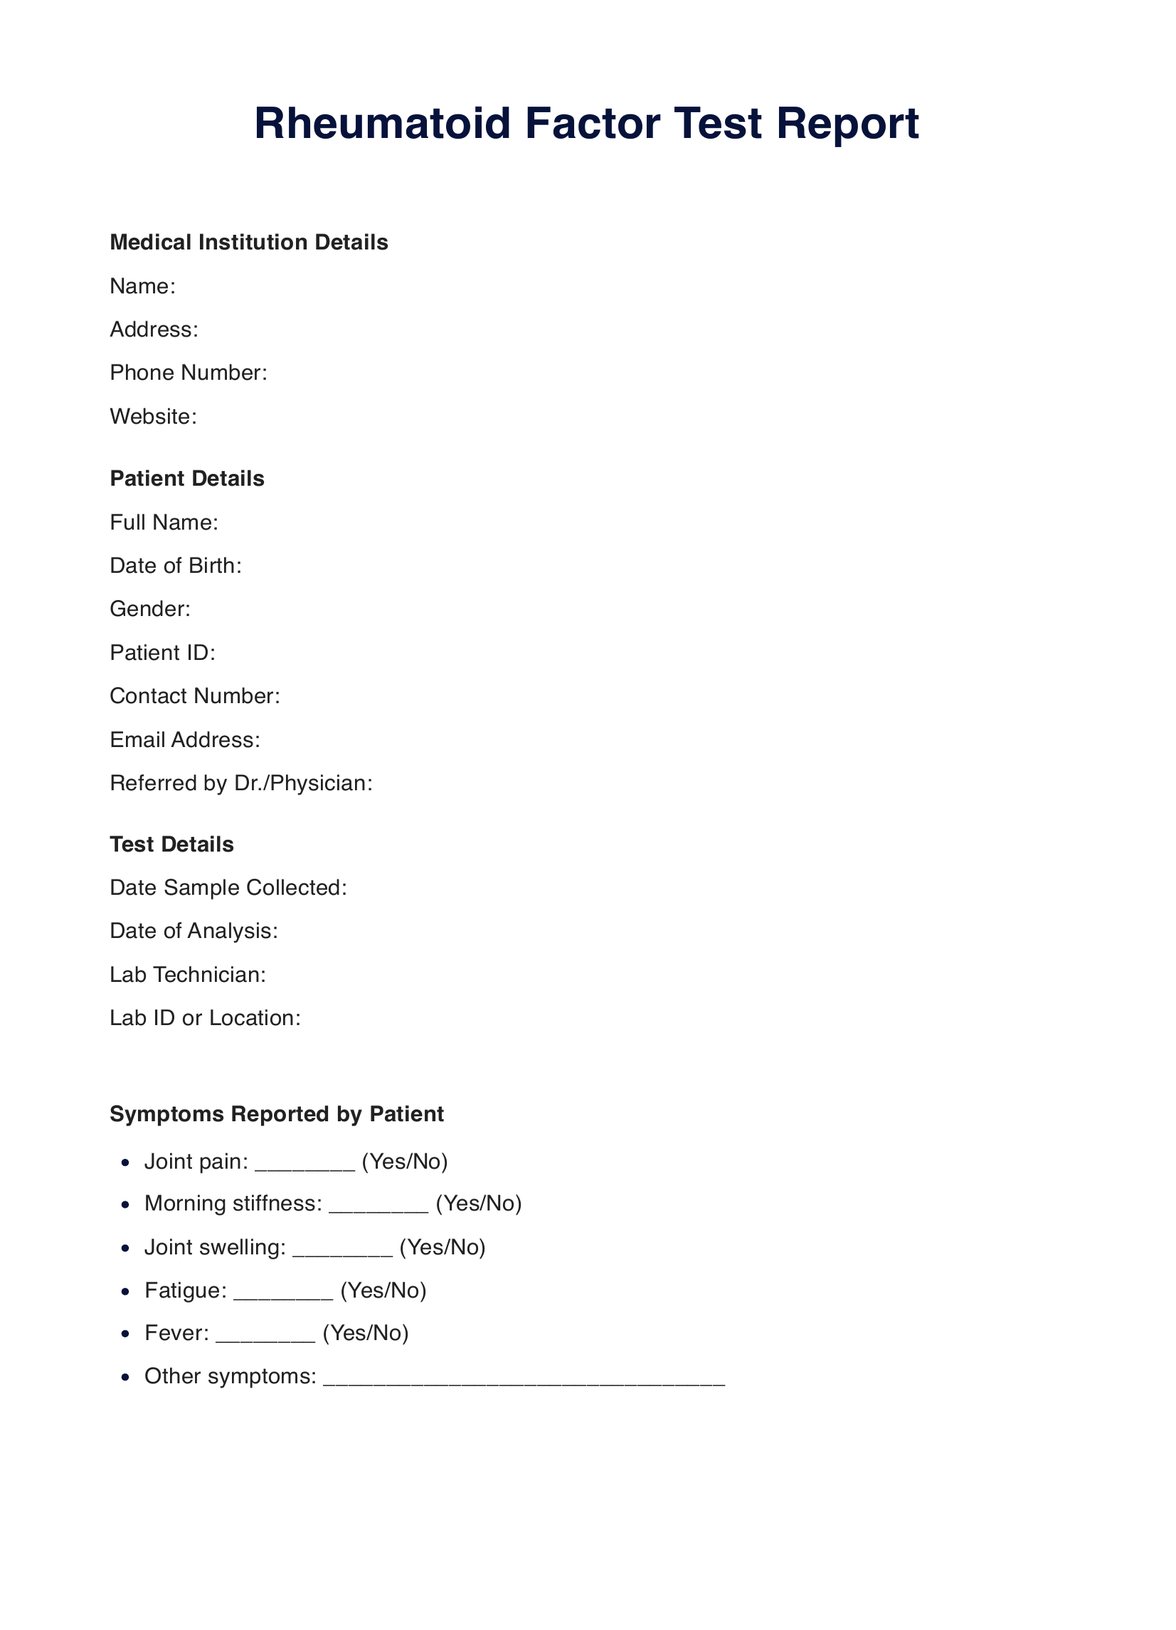 Rheumatoid Factor PDF Example